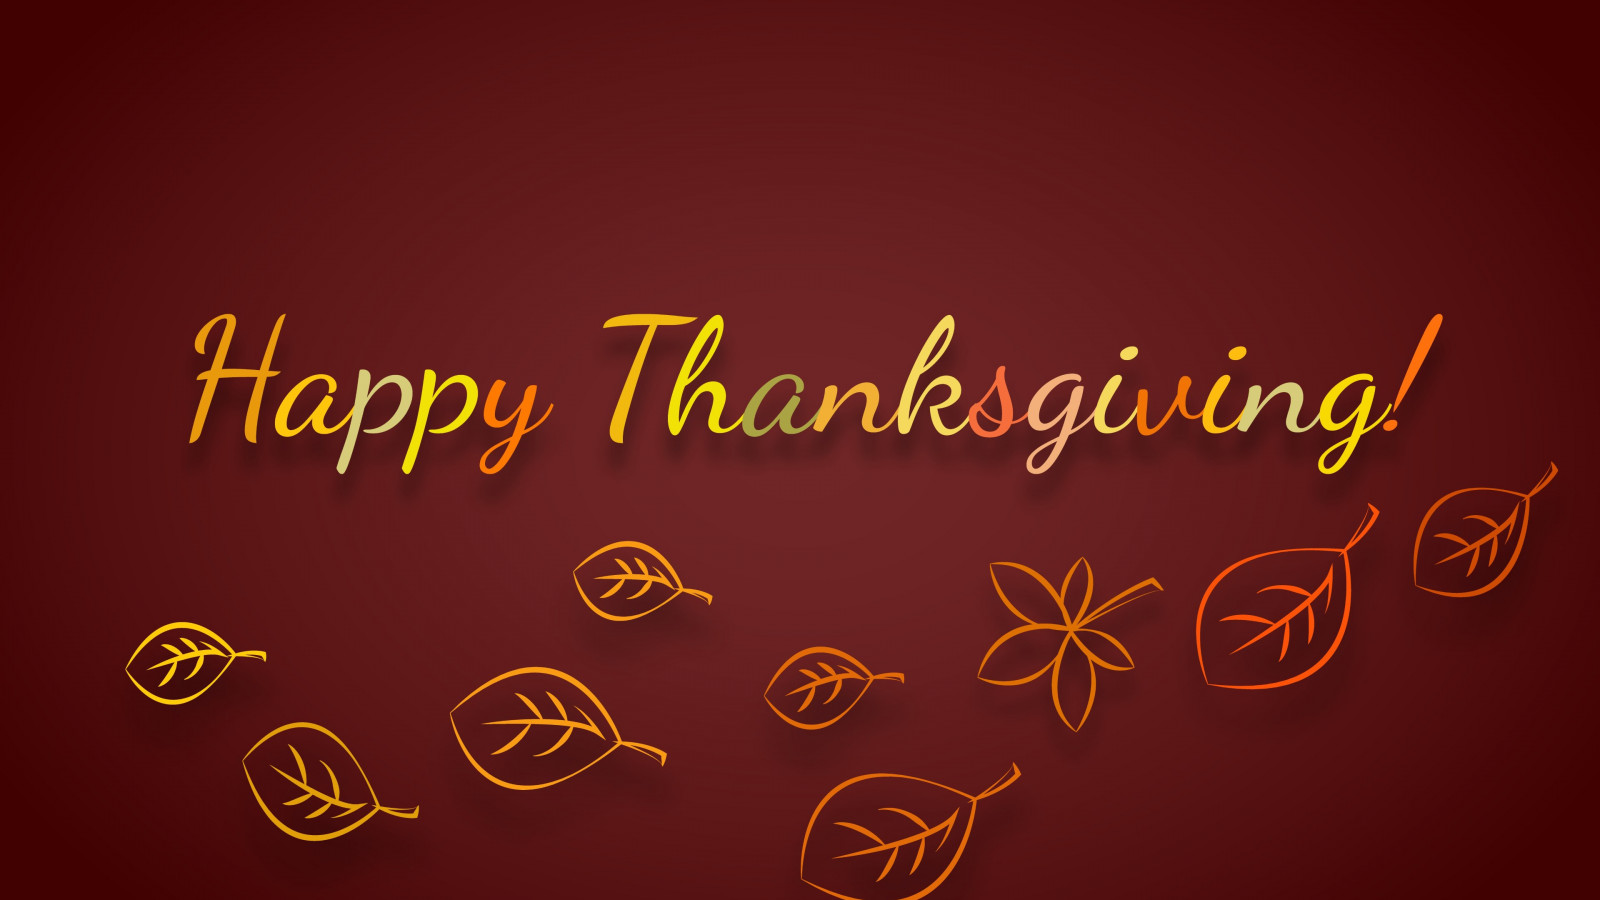 Download wallpaper: Happy Thanksgiving 1600x900